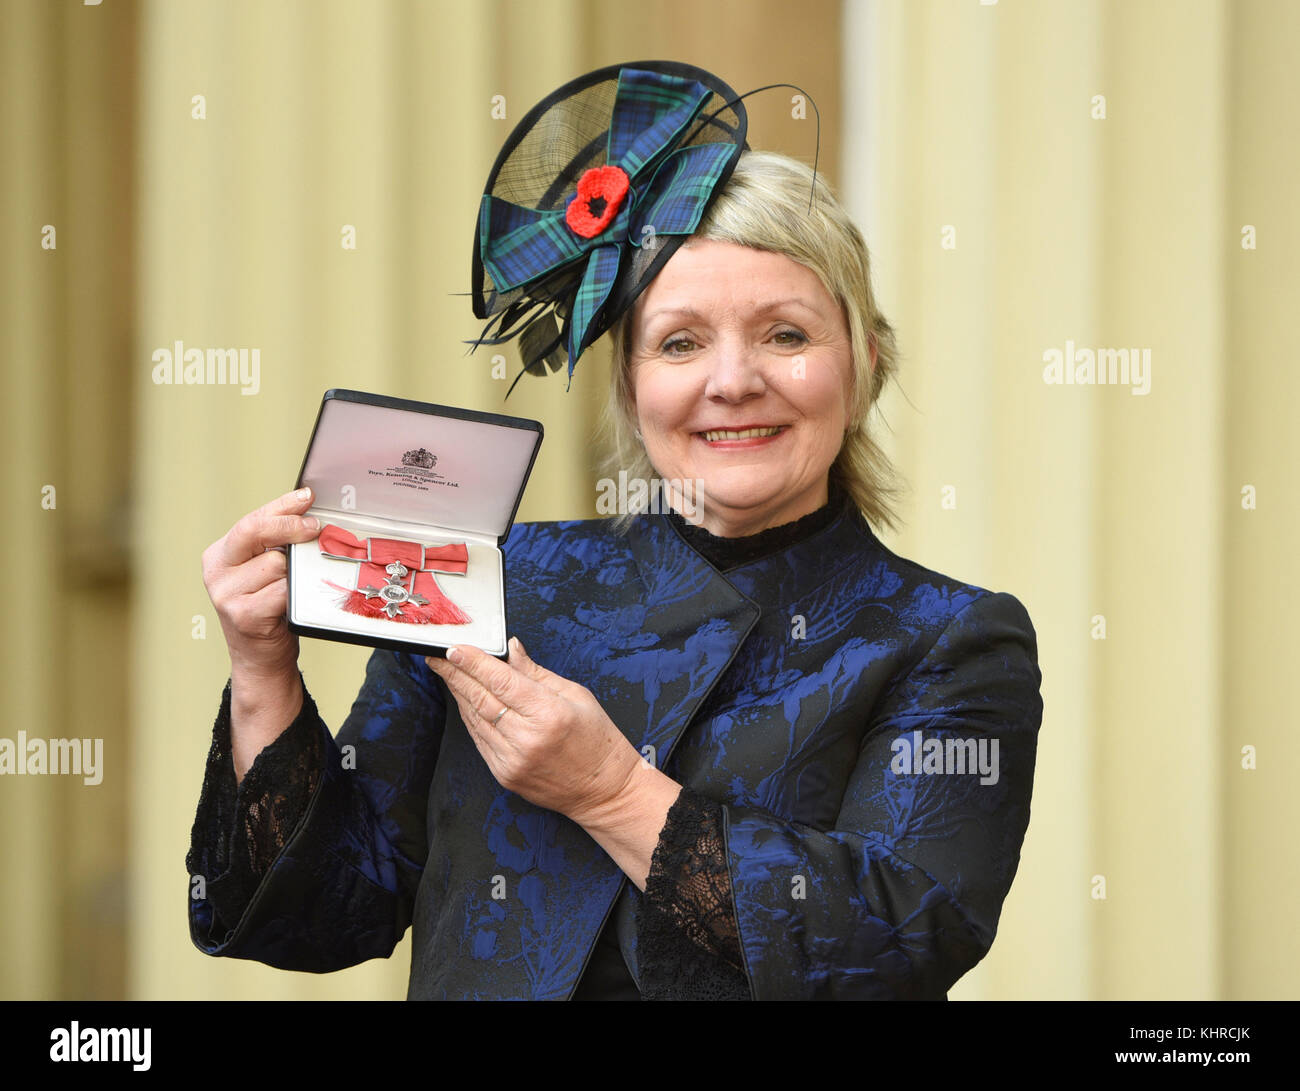 Photo Must Be Credited ©Alpha Press 079965 10th November 2017 Angela Malone Investitures At Buckingham Palace London Stock Photo